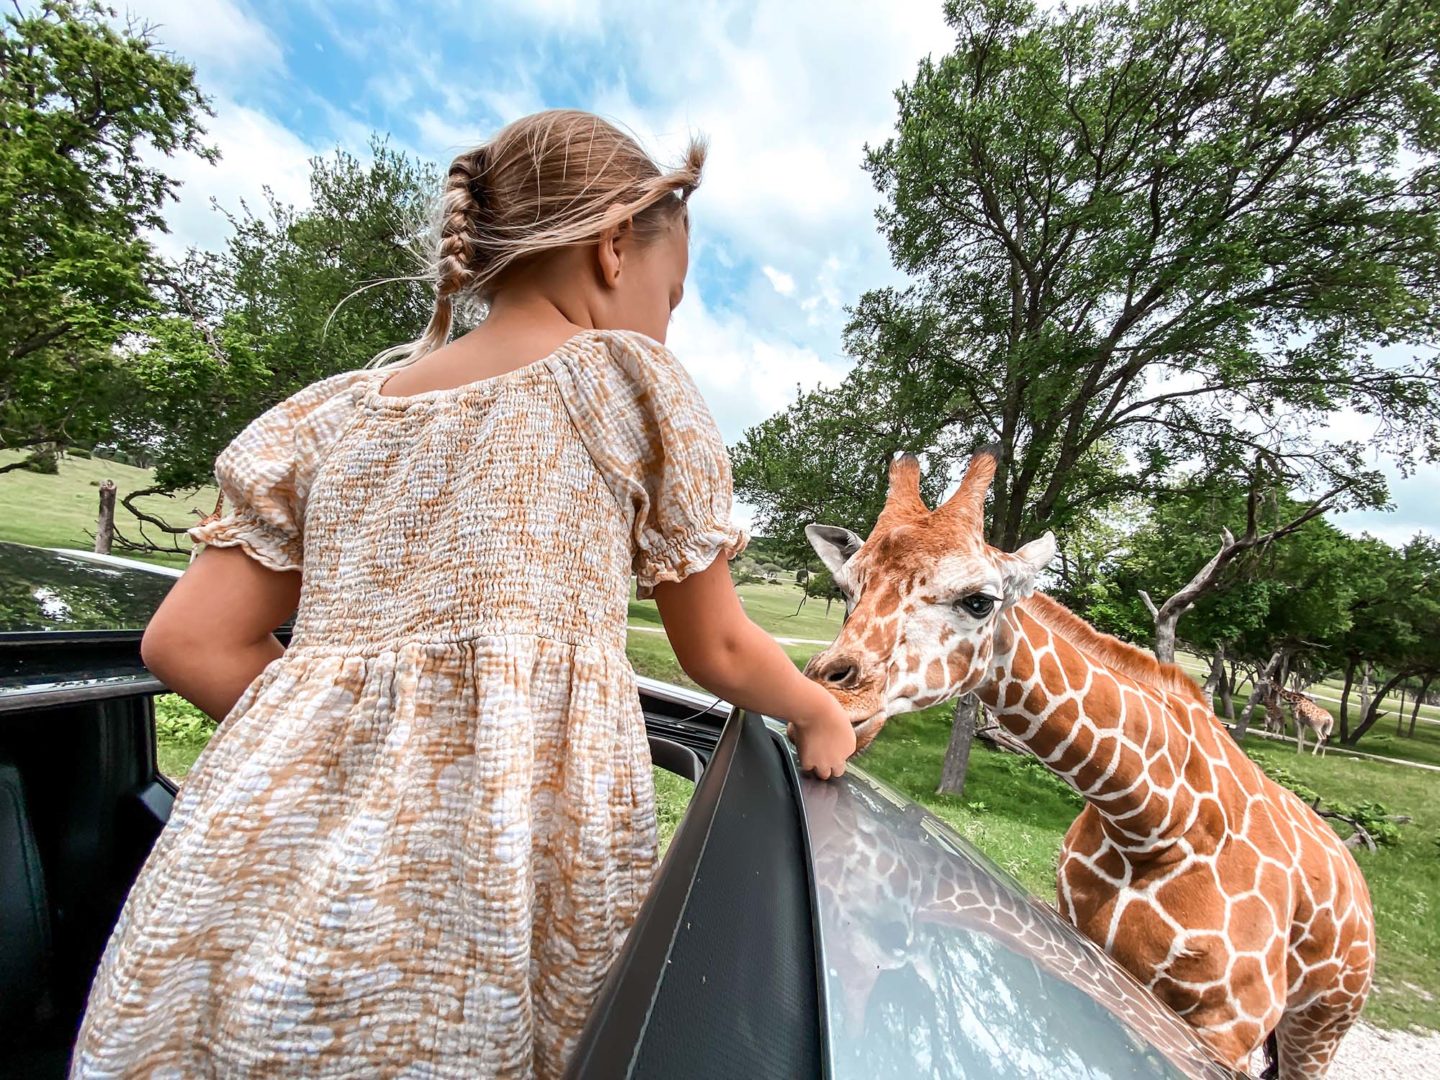 Feeding Giraffes Texas